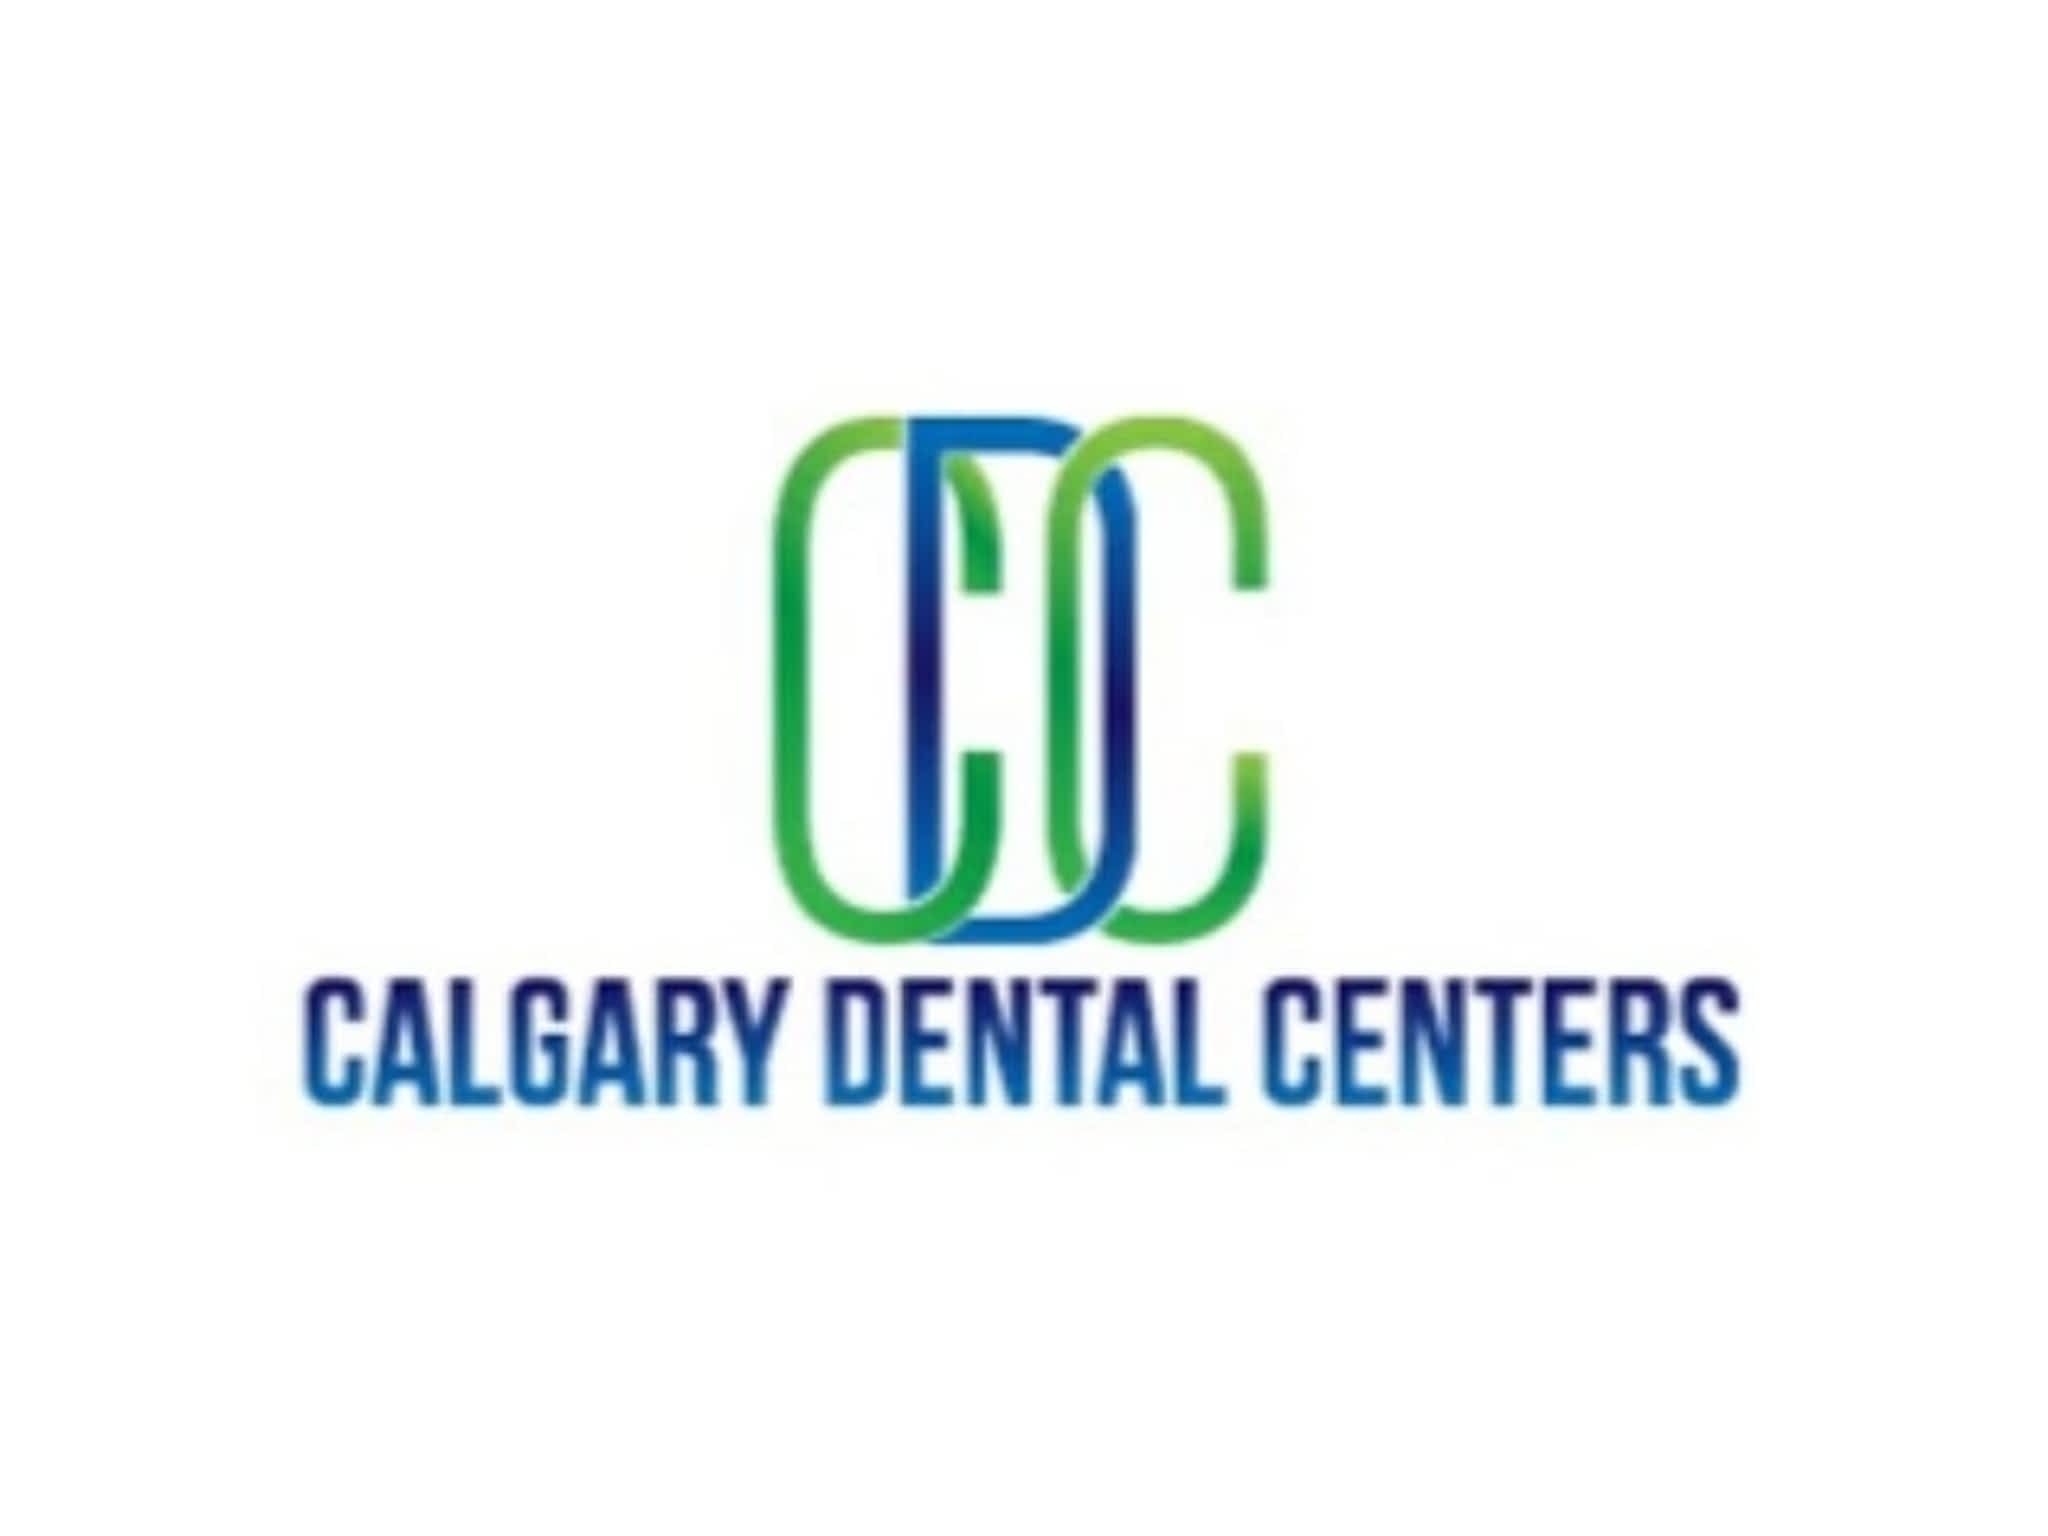 photo Calgary’s Dental Care